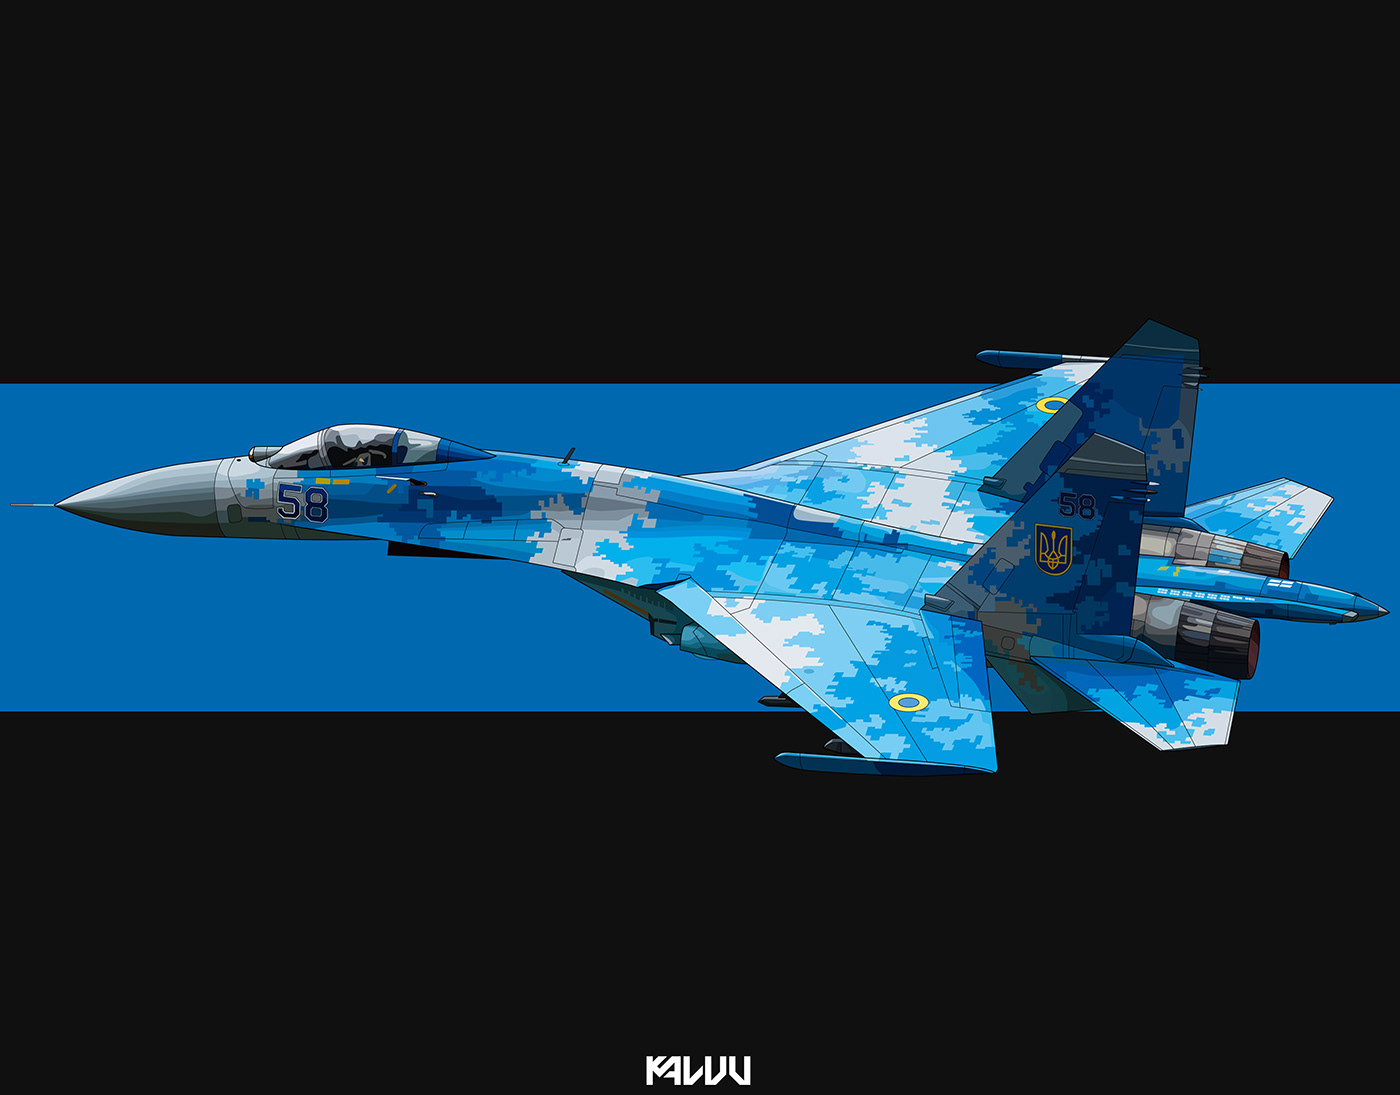 sukhoi fighter jet Aircraft aviation airforce Military blue aviation art Jet su-27